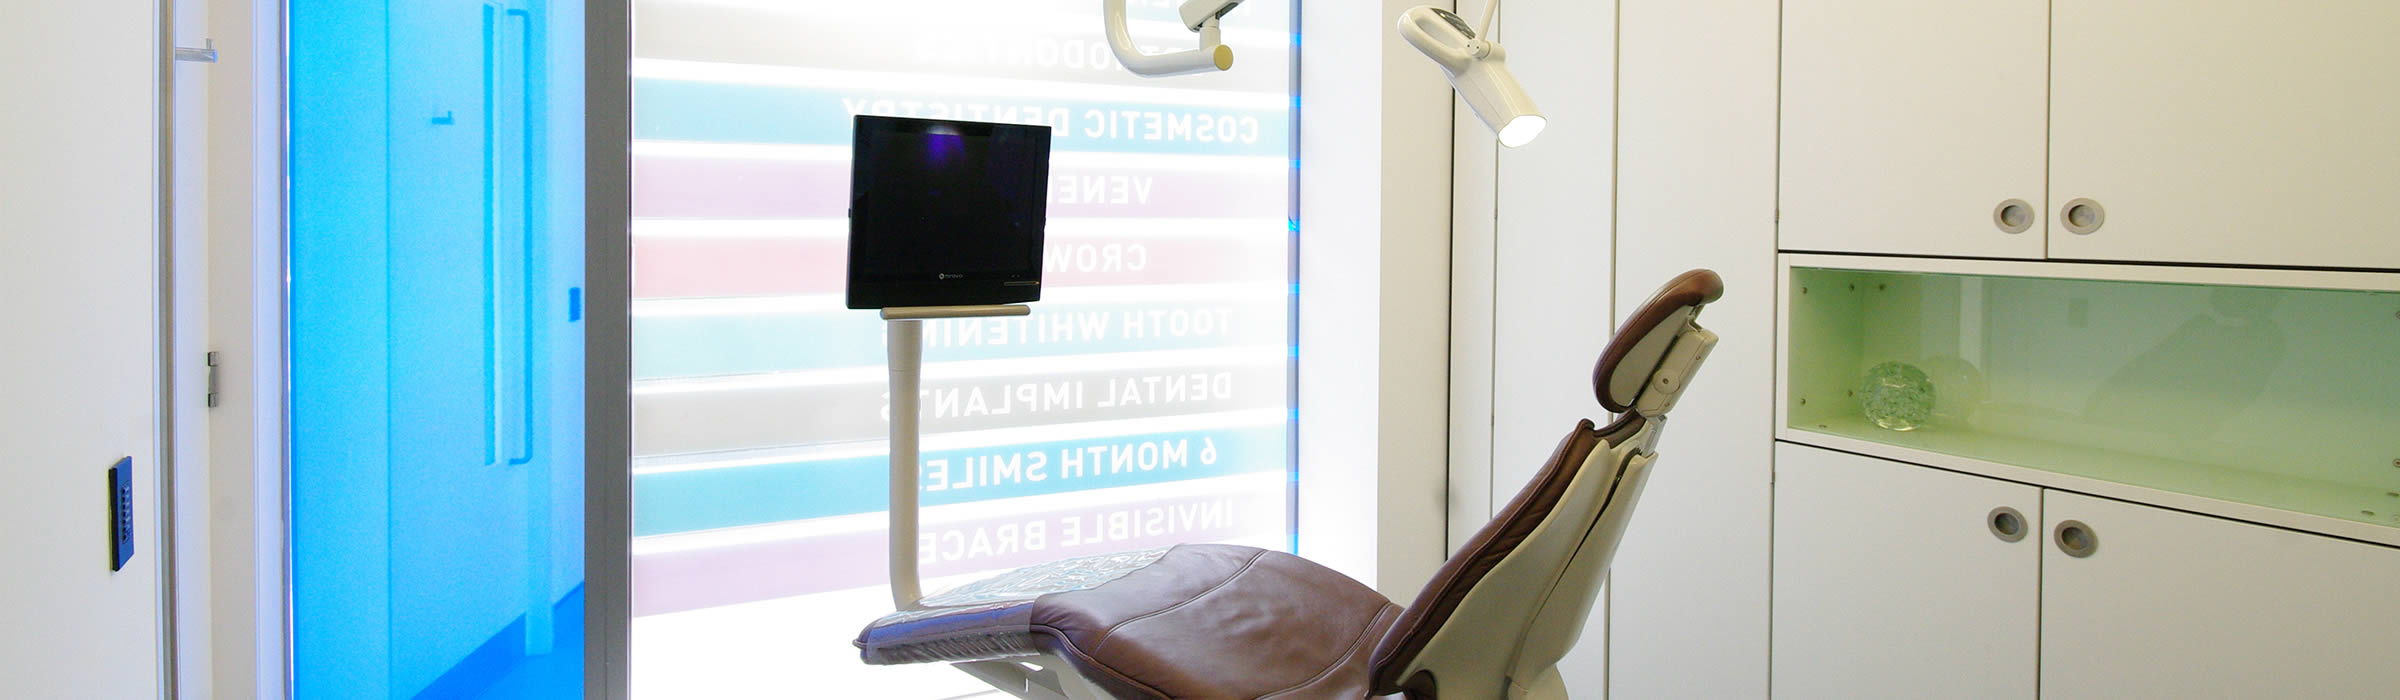 Dental chair with screen at our Watford dentist, Senova Dental Studios in Watford, Hertfordshire